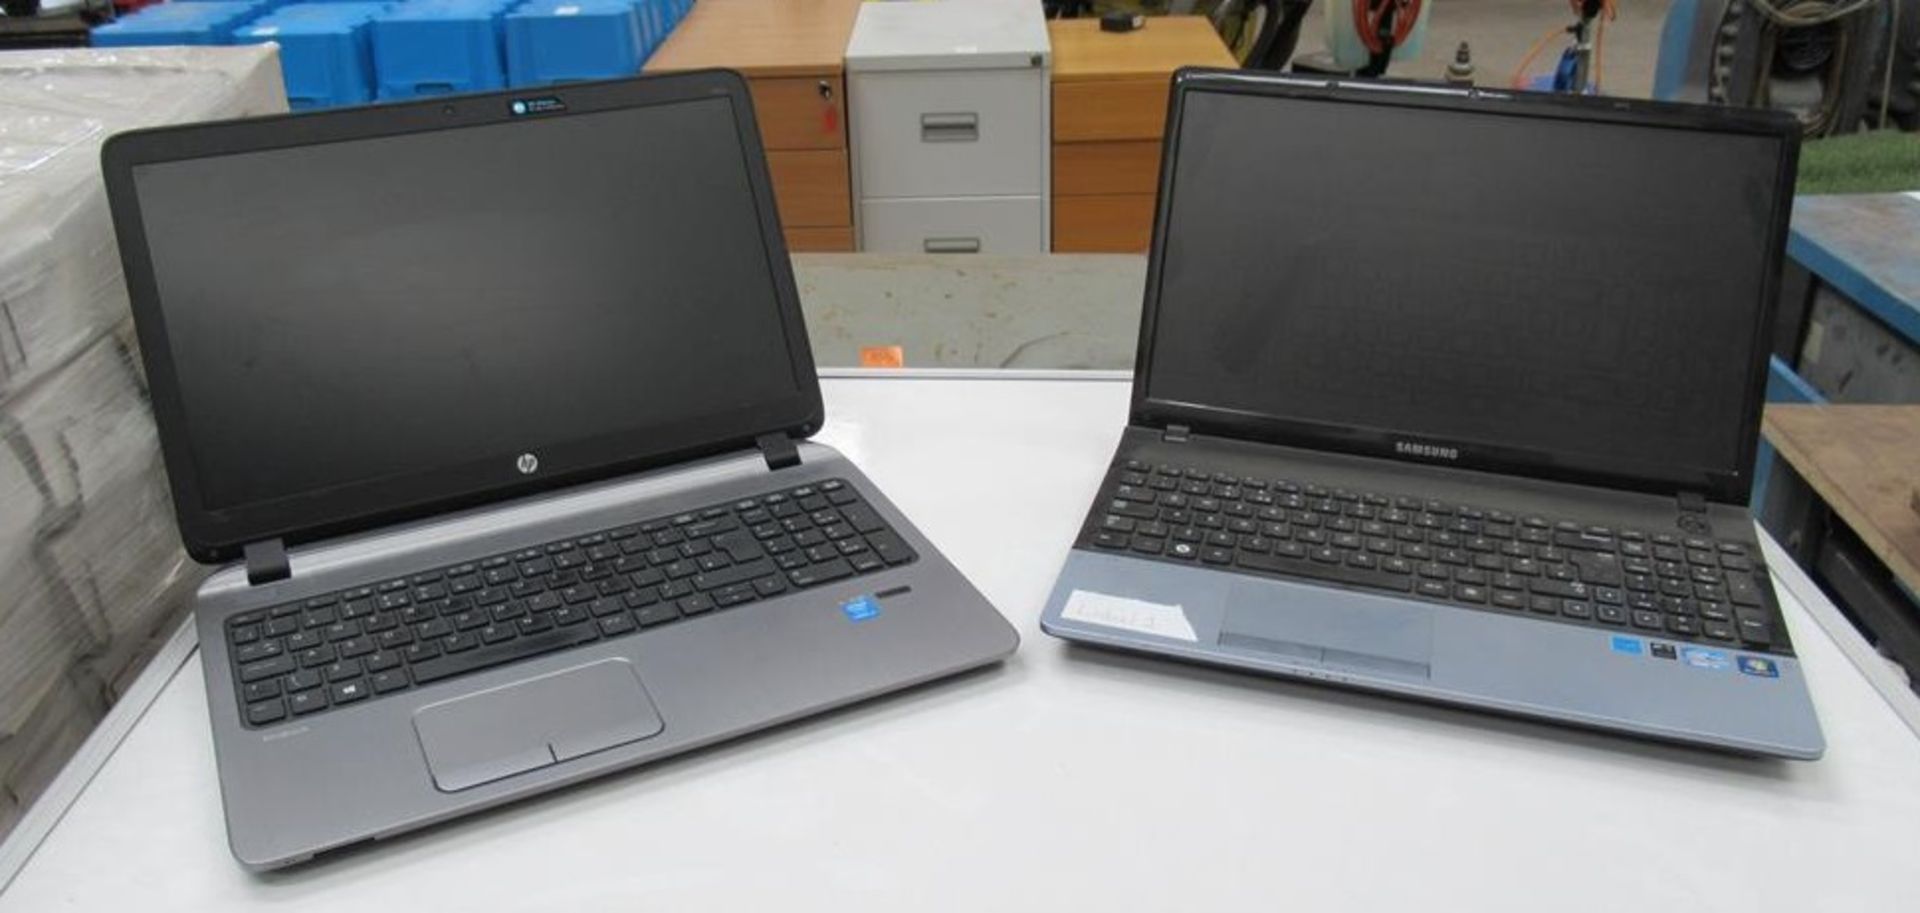 1 x HP i3 Laptop and 1 x Samsung i3 laptop - Image 2 of 2